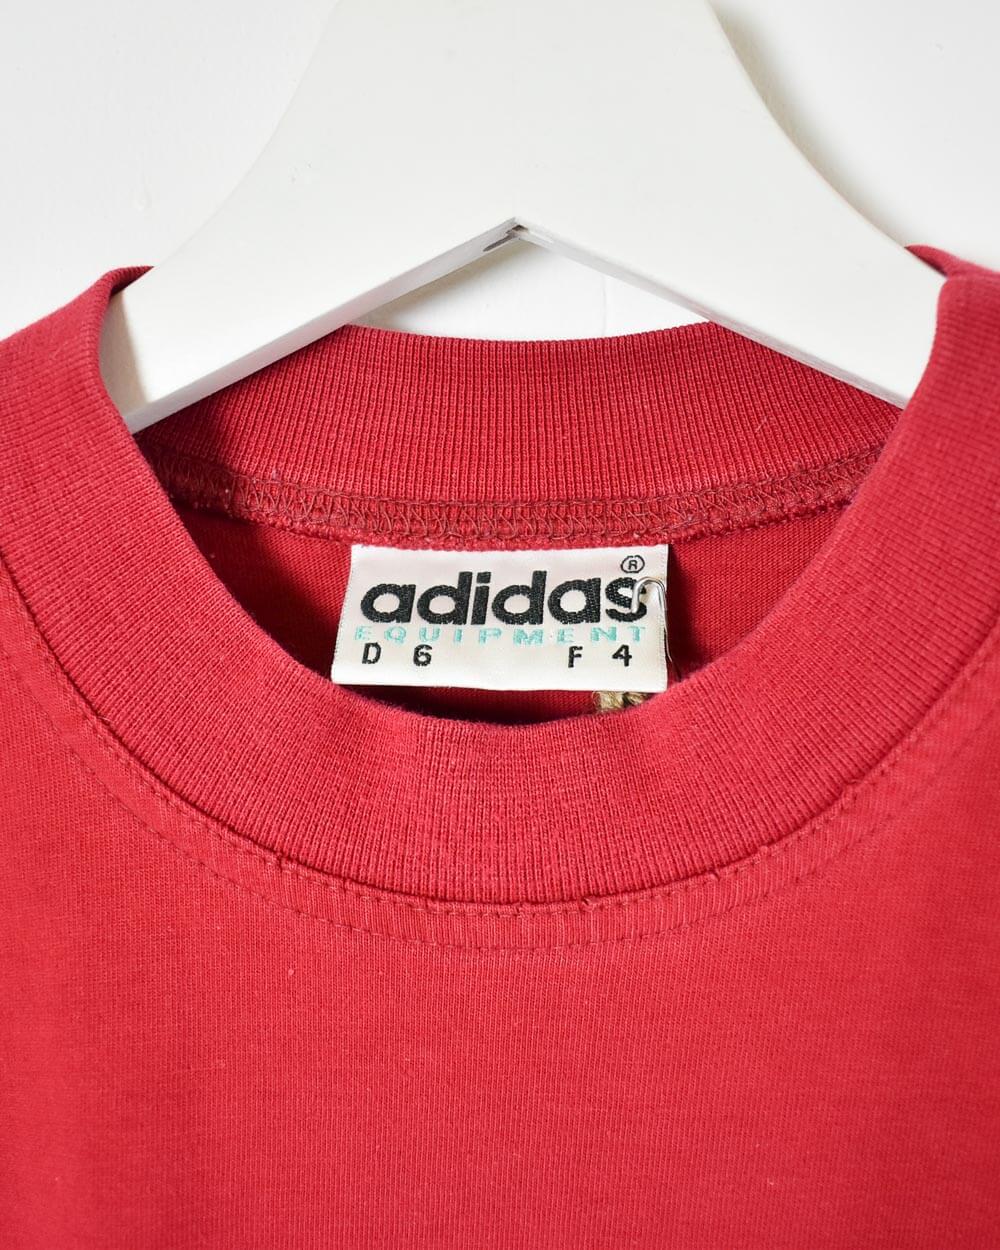 Red Adidas Equipment T-Shirt - Medium